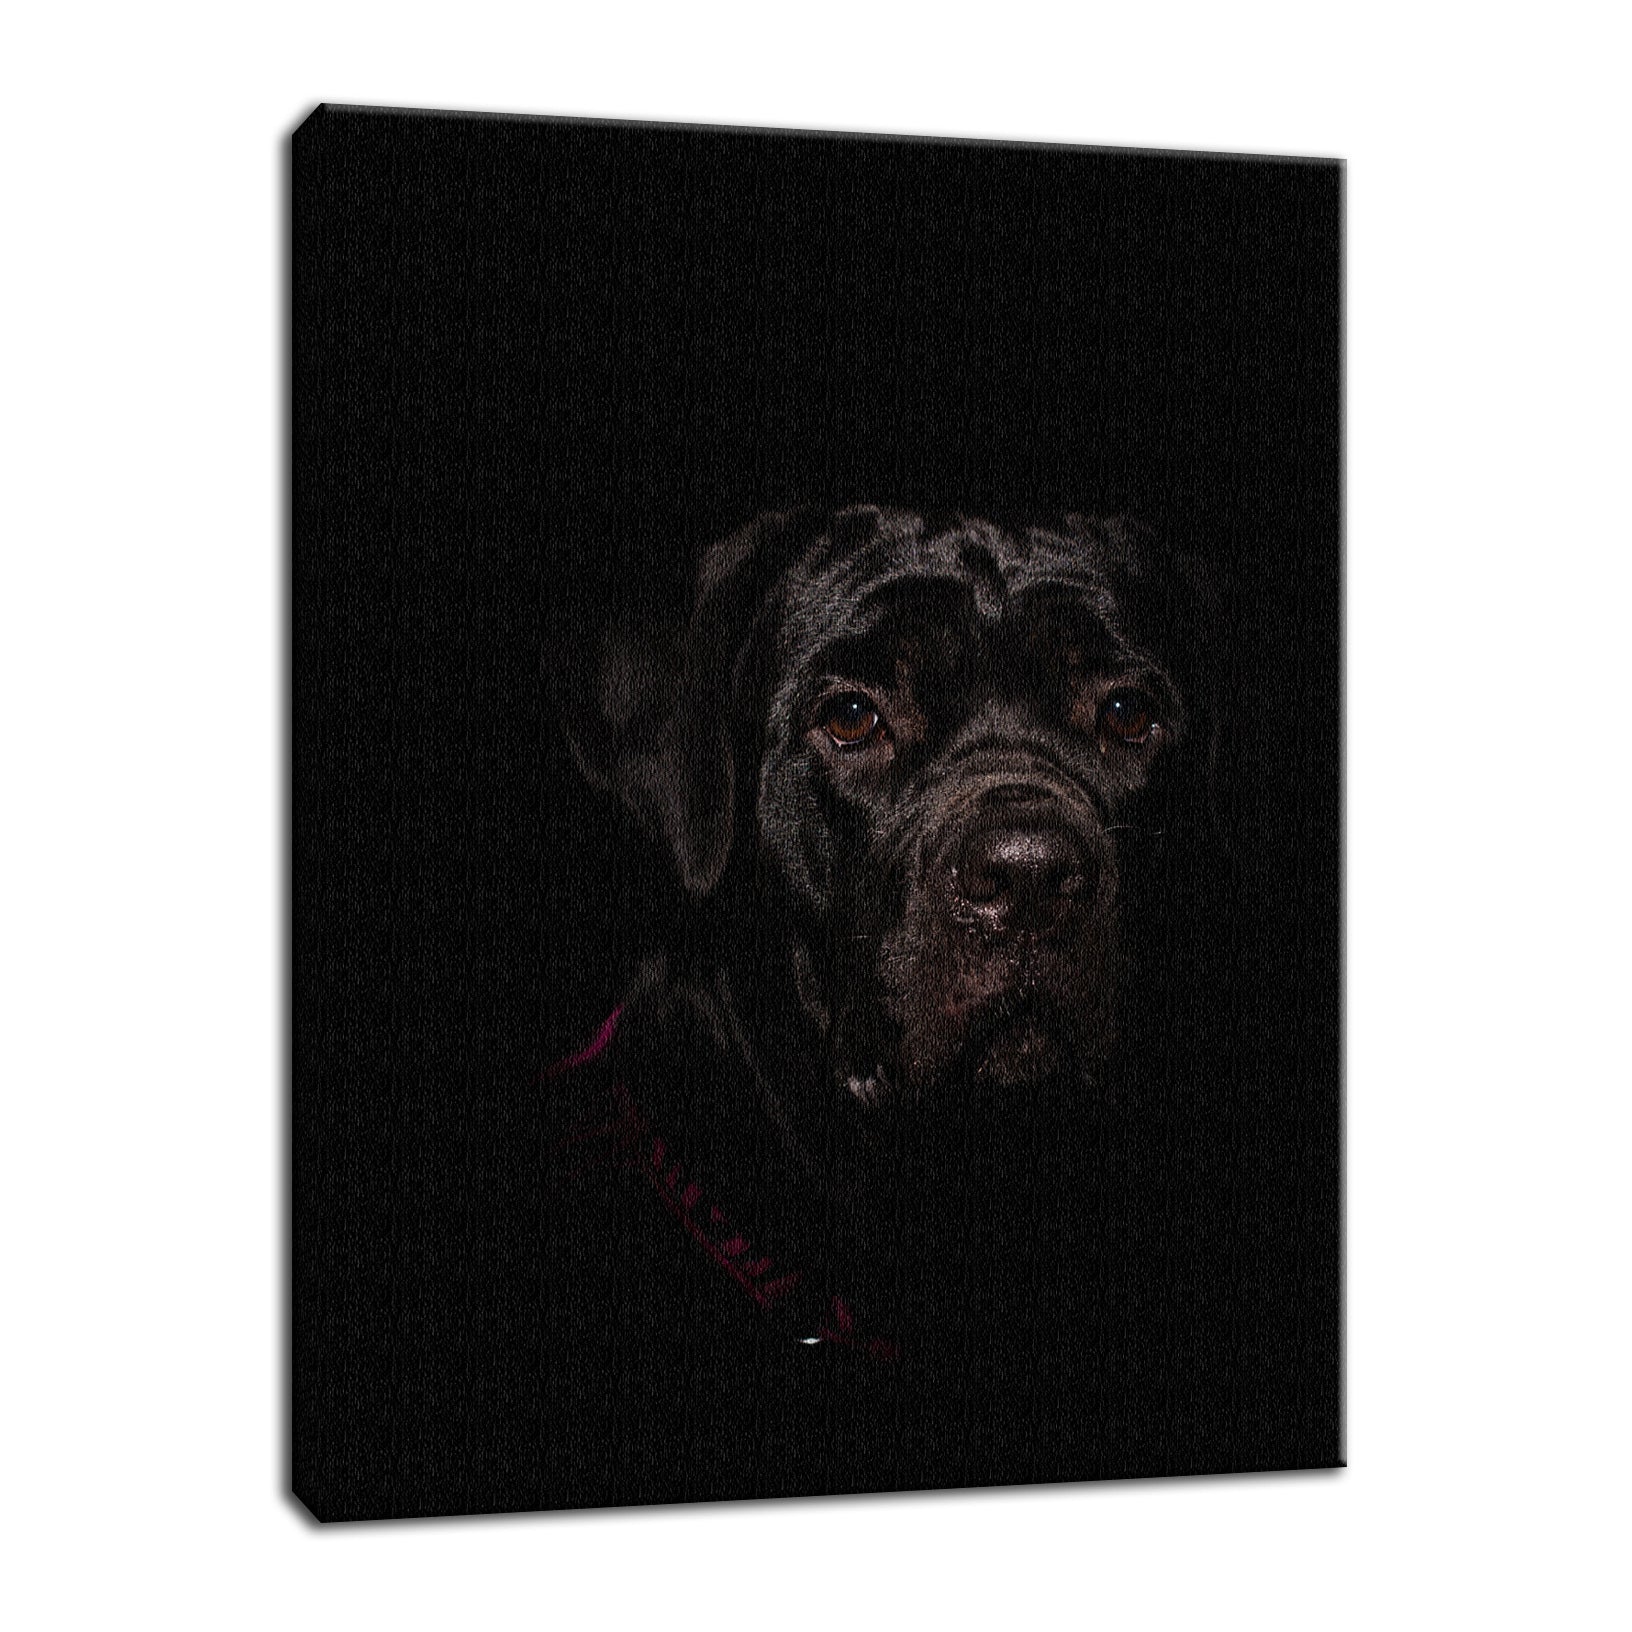 Cane Corso Puppy Low Key Animal Dog Photograph Fine Art Canvas Unframed Wall Art Prints